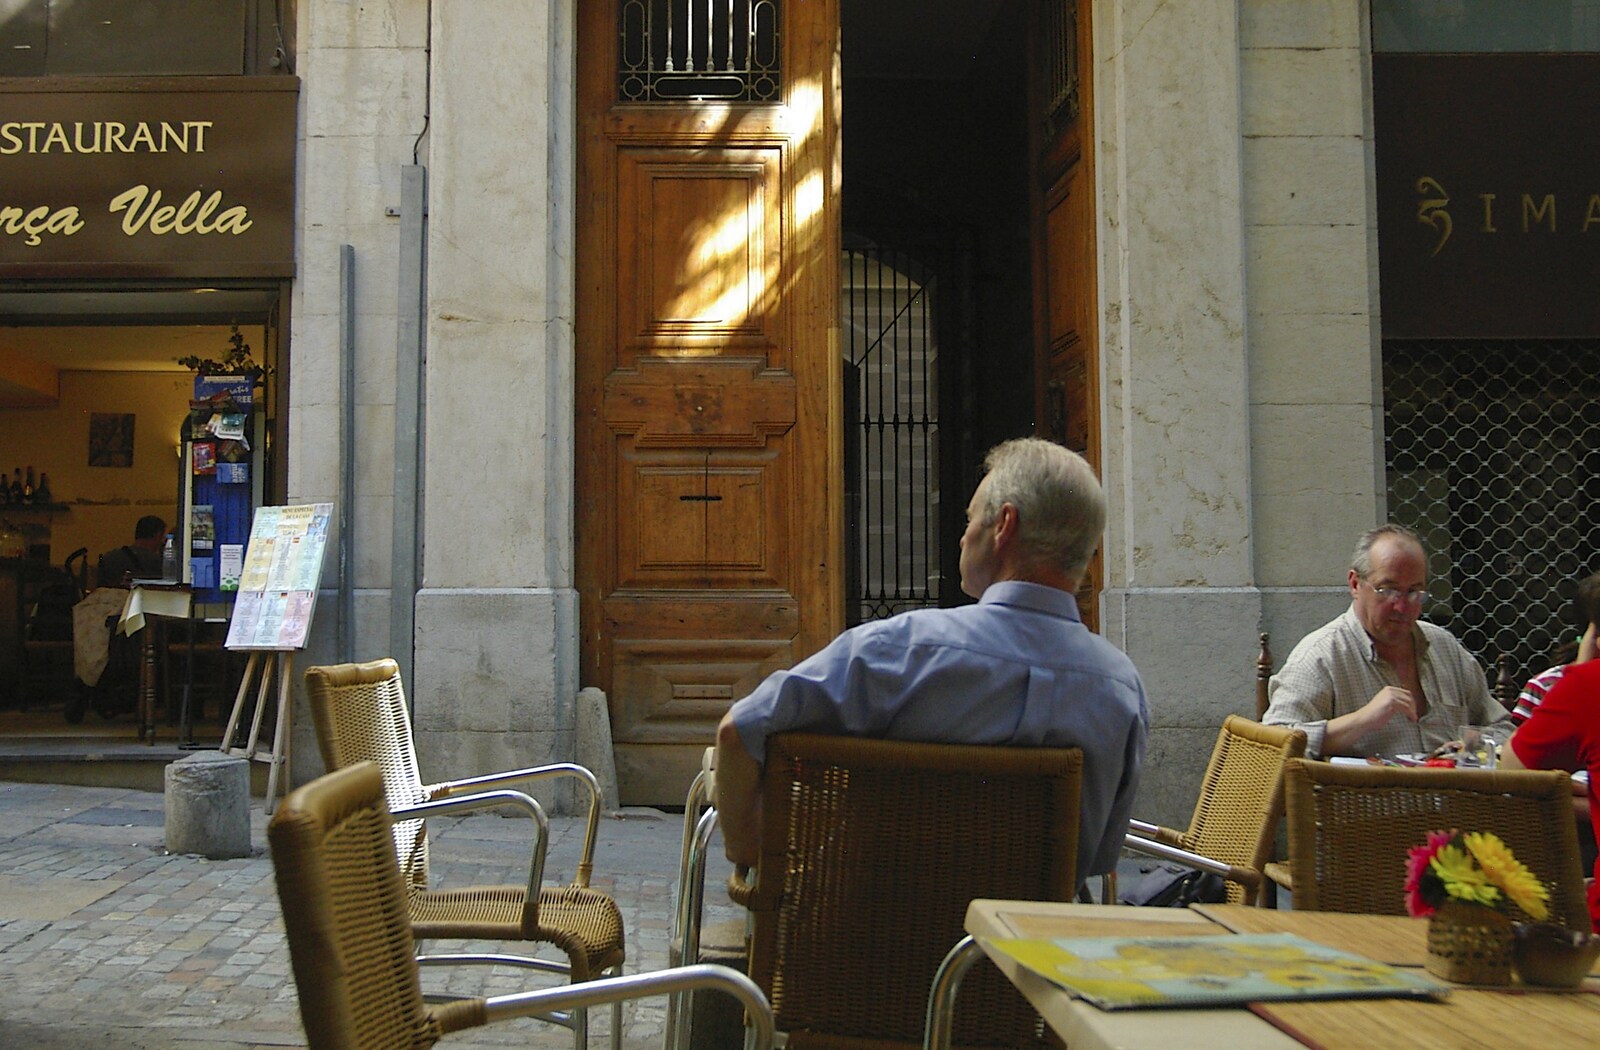 Café scenes from Girona, Catalunya, Spain - 17th September 2006